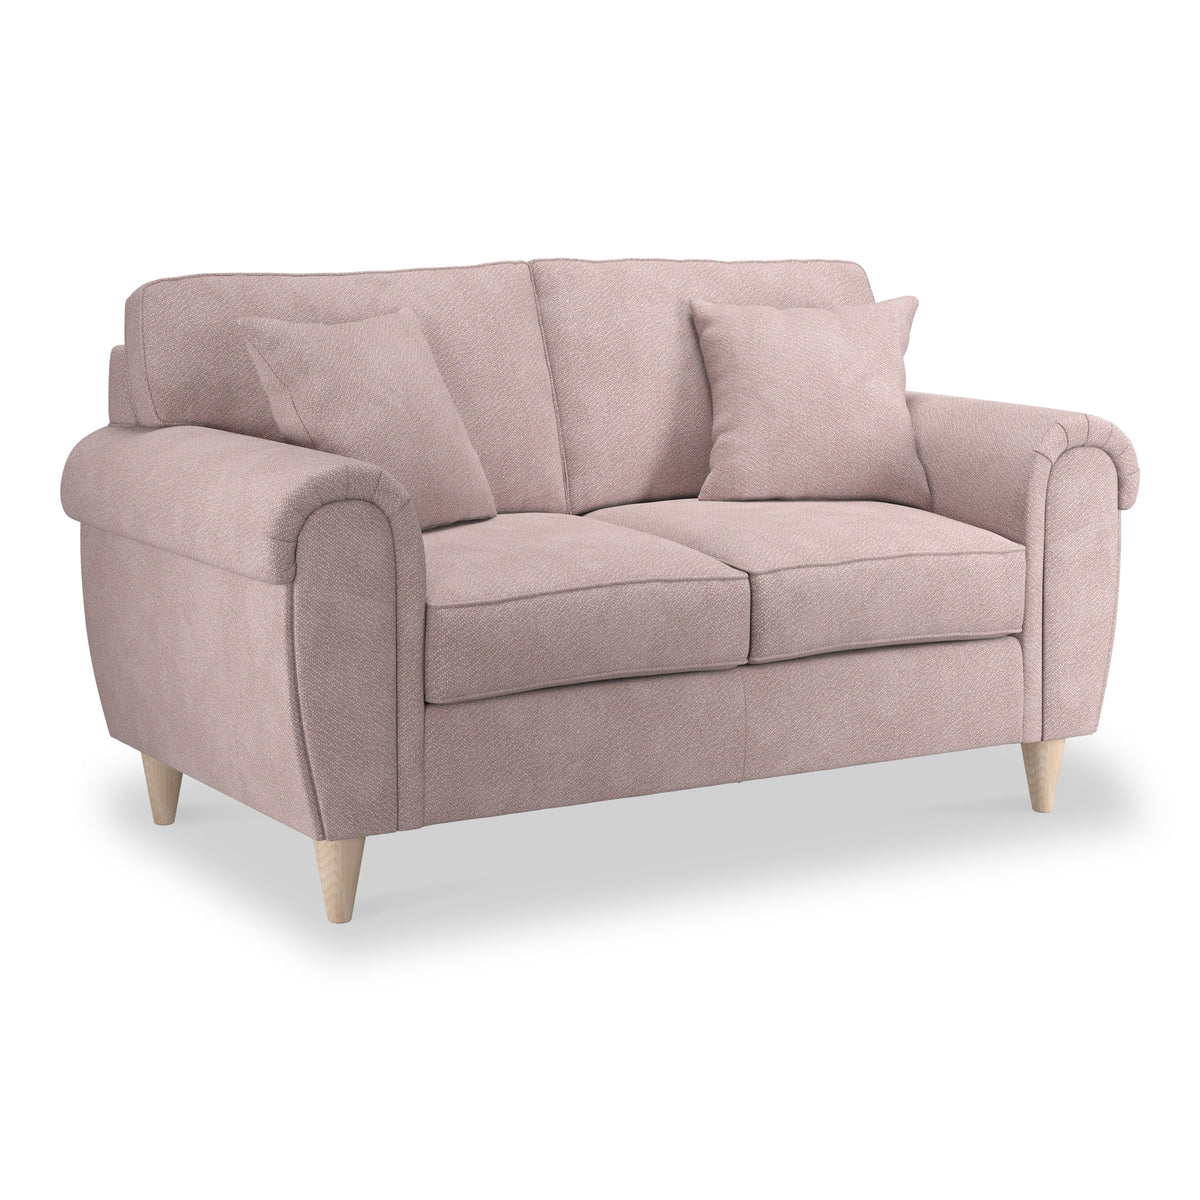 Harry Mauve 2 Seater Sofa from Roseland Furniture